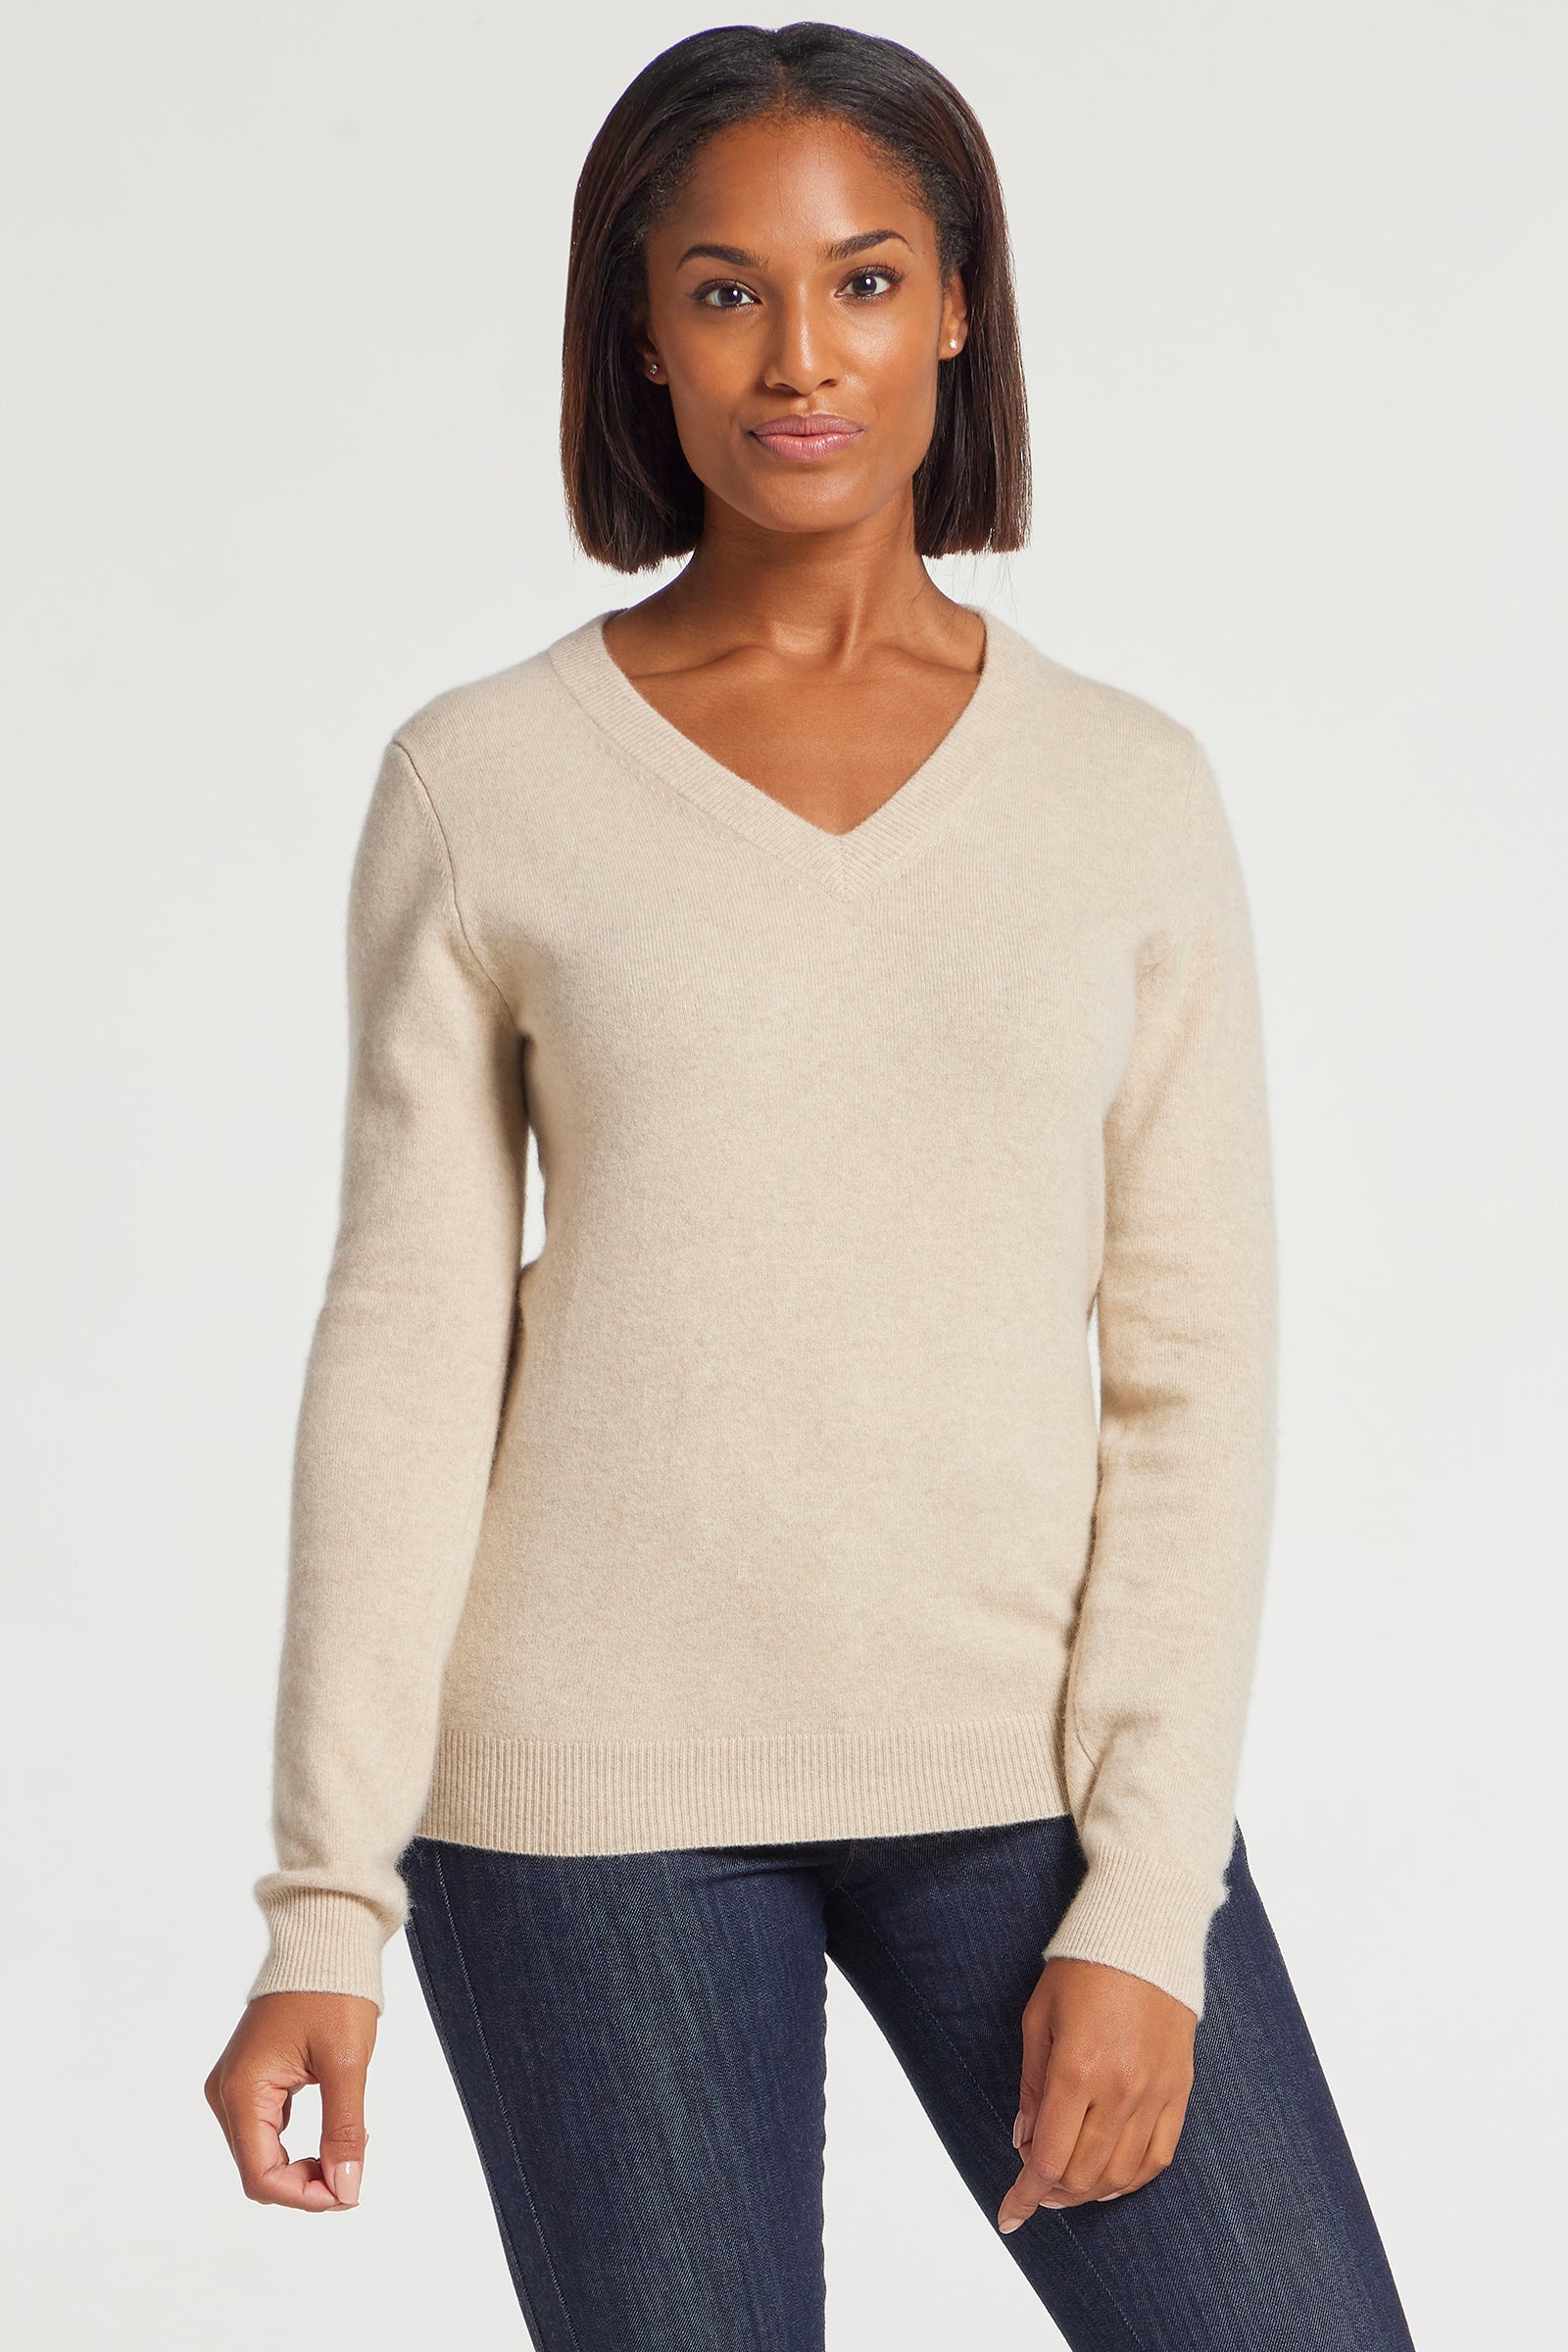 Luxury Travel Clothing | Etta V-Neck Cashmere Women's Sweater ...